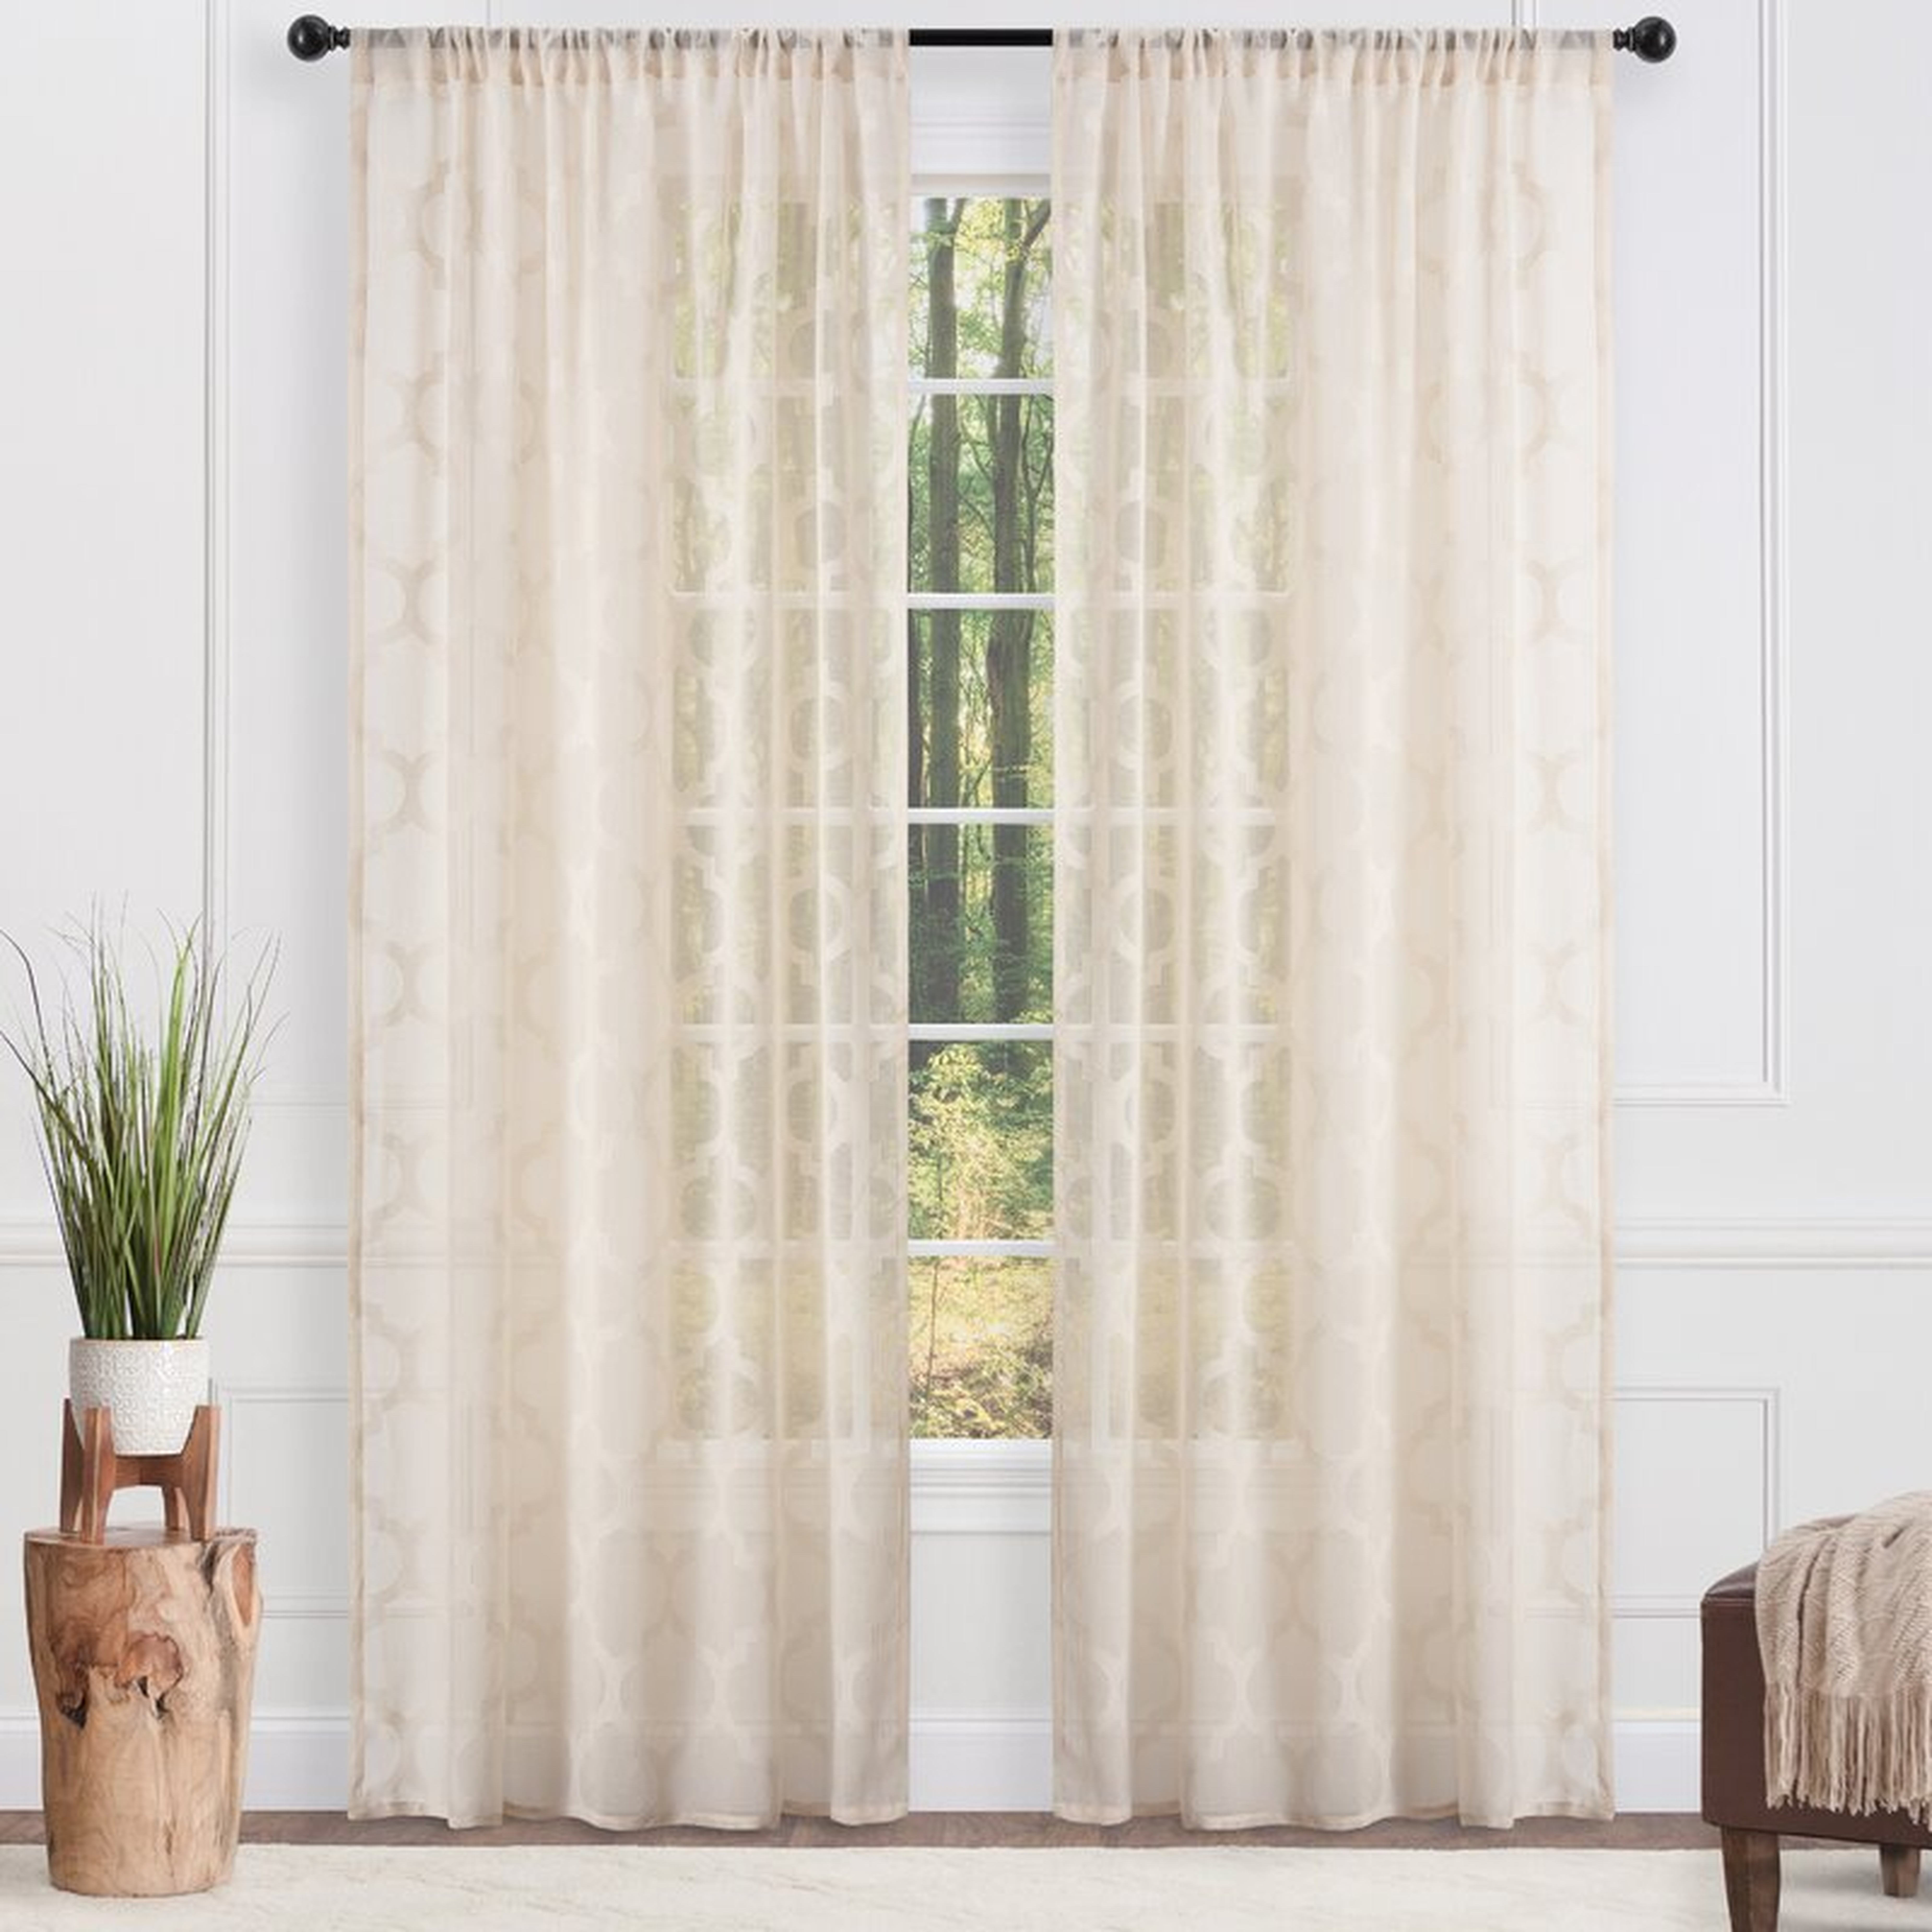 Quatrefoil Textured Voile Sheer Curtain Panel Set - Wayfair